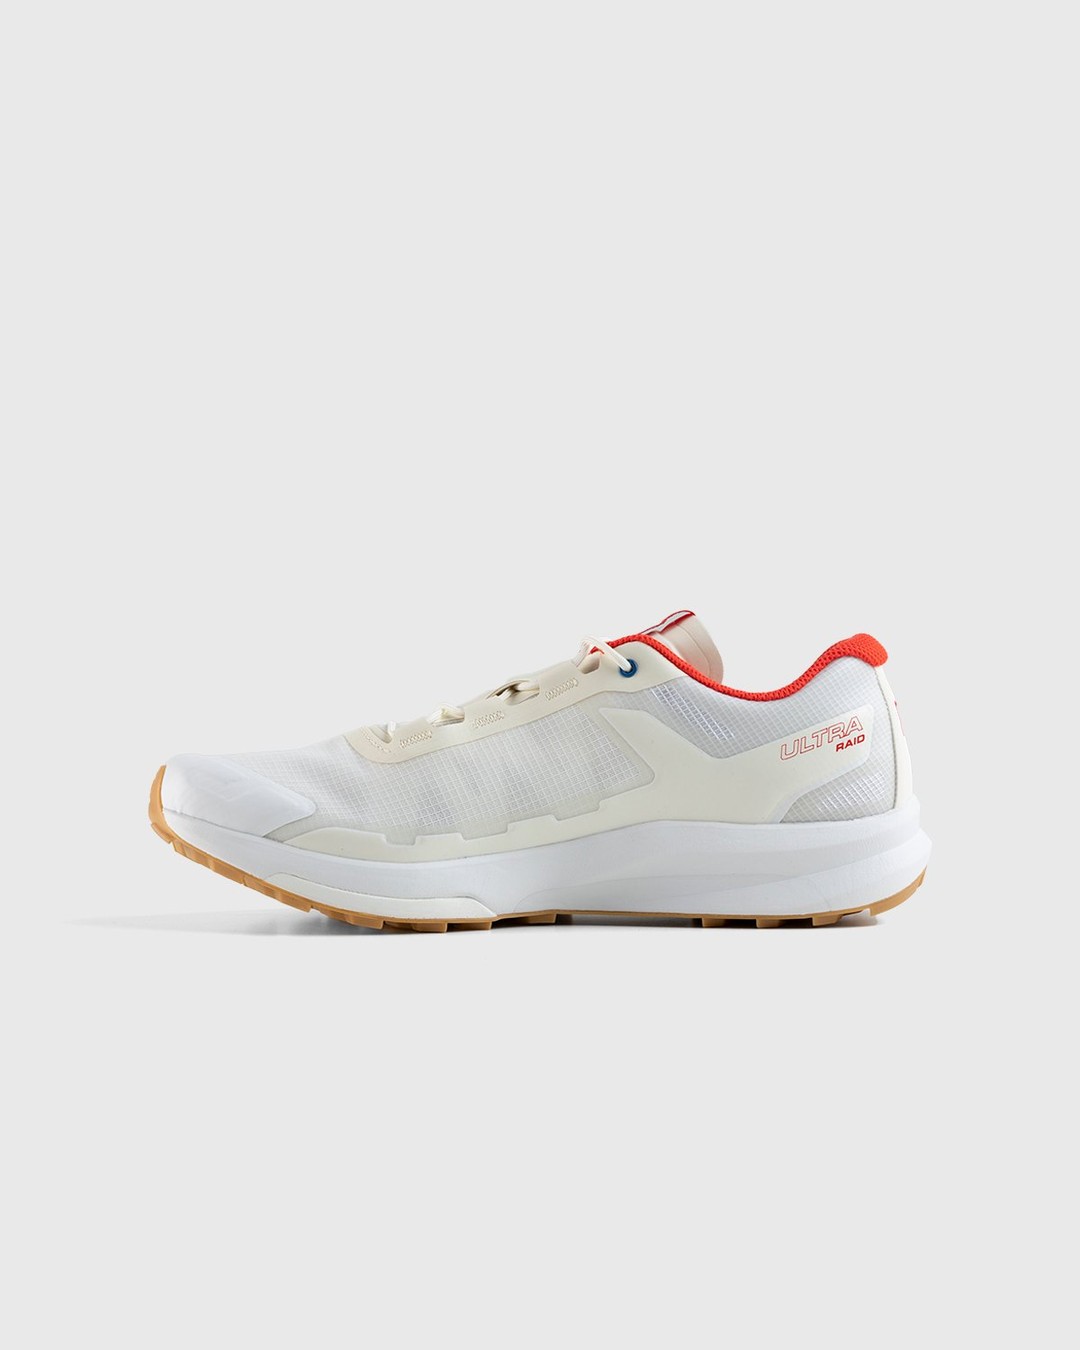 Copson x Salomon – Ultra Raid White/Red - Low Top Sneakers - White - Image 2